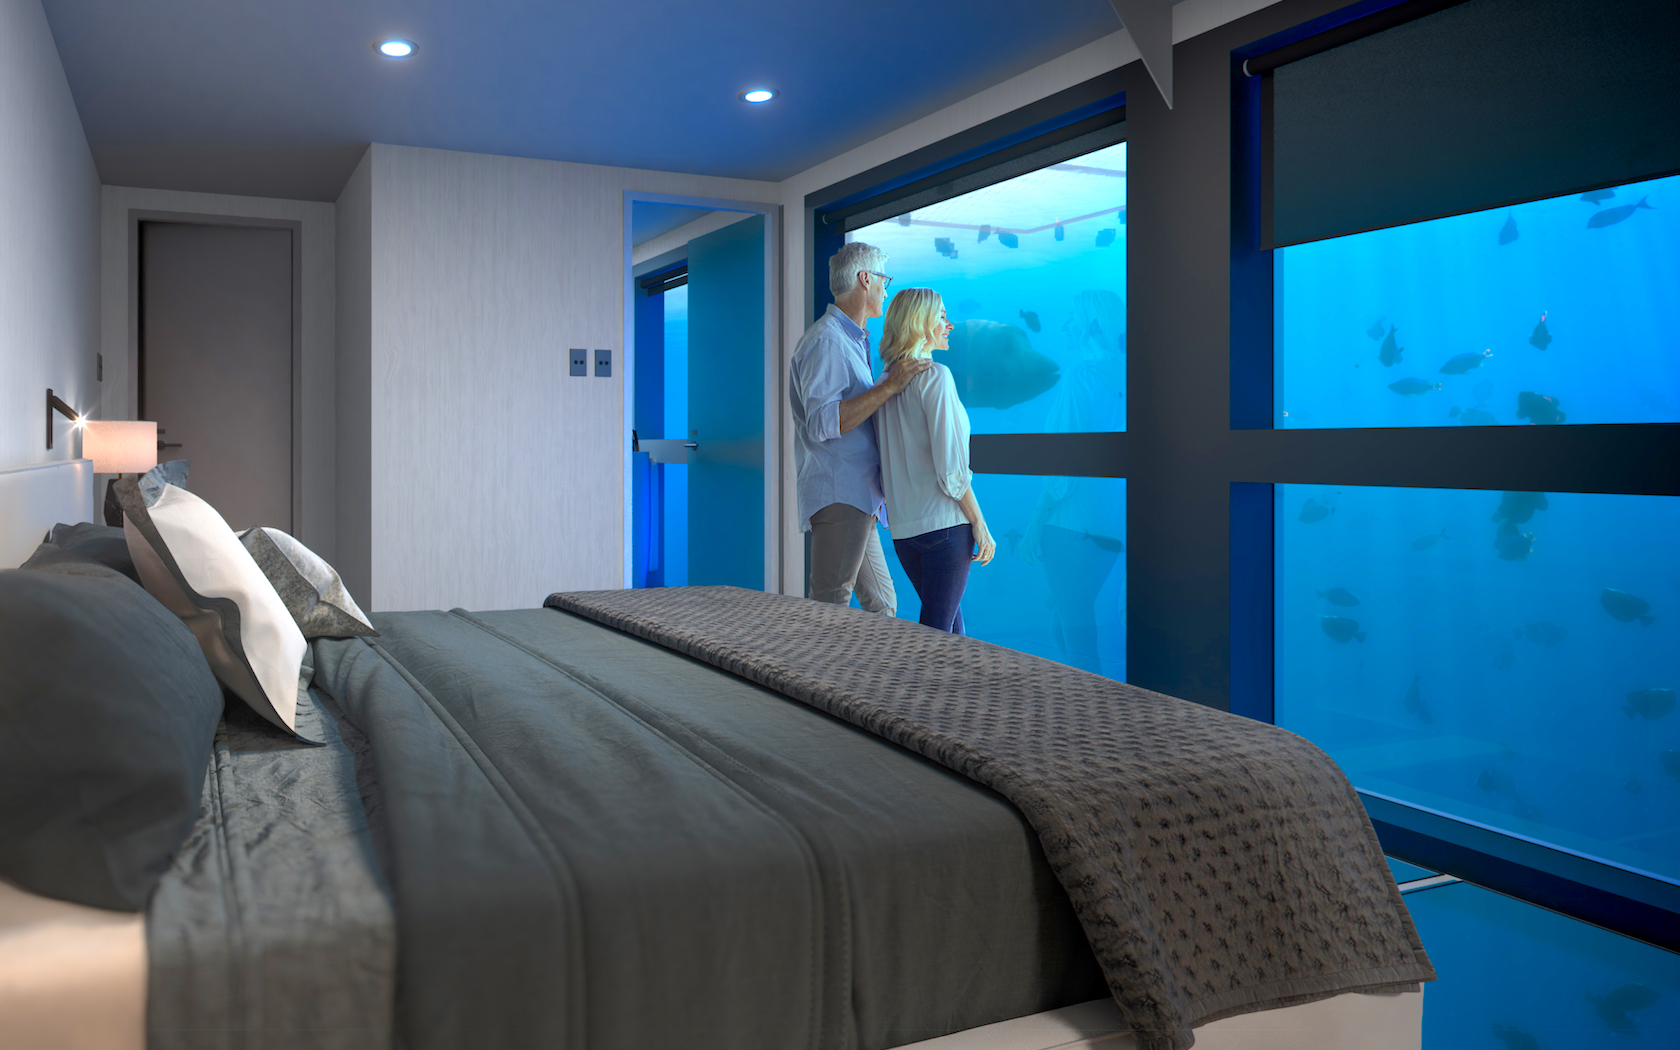 Reefsuites: An Underwater Hotel Is Opening On The Great Barrier Reef